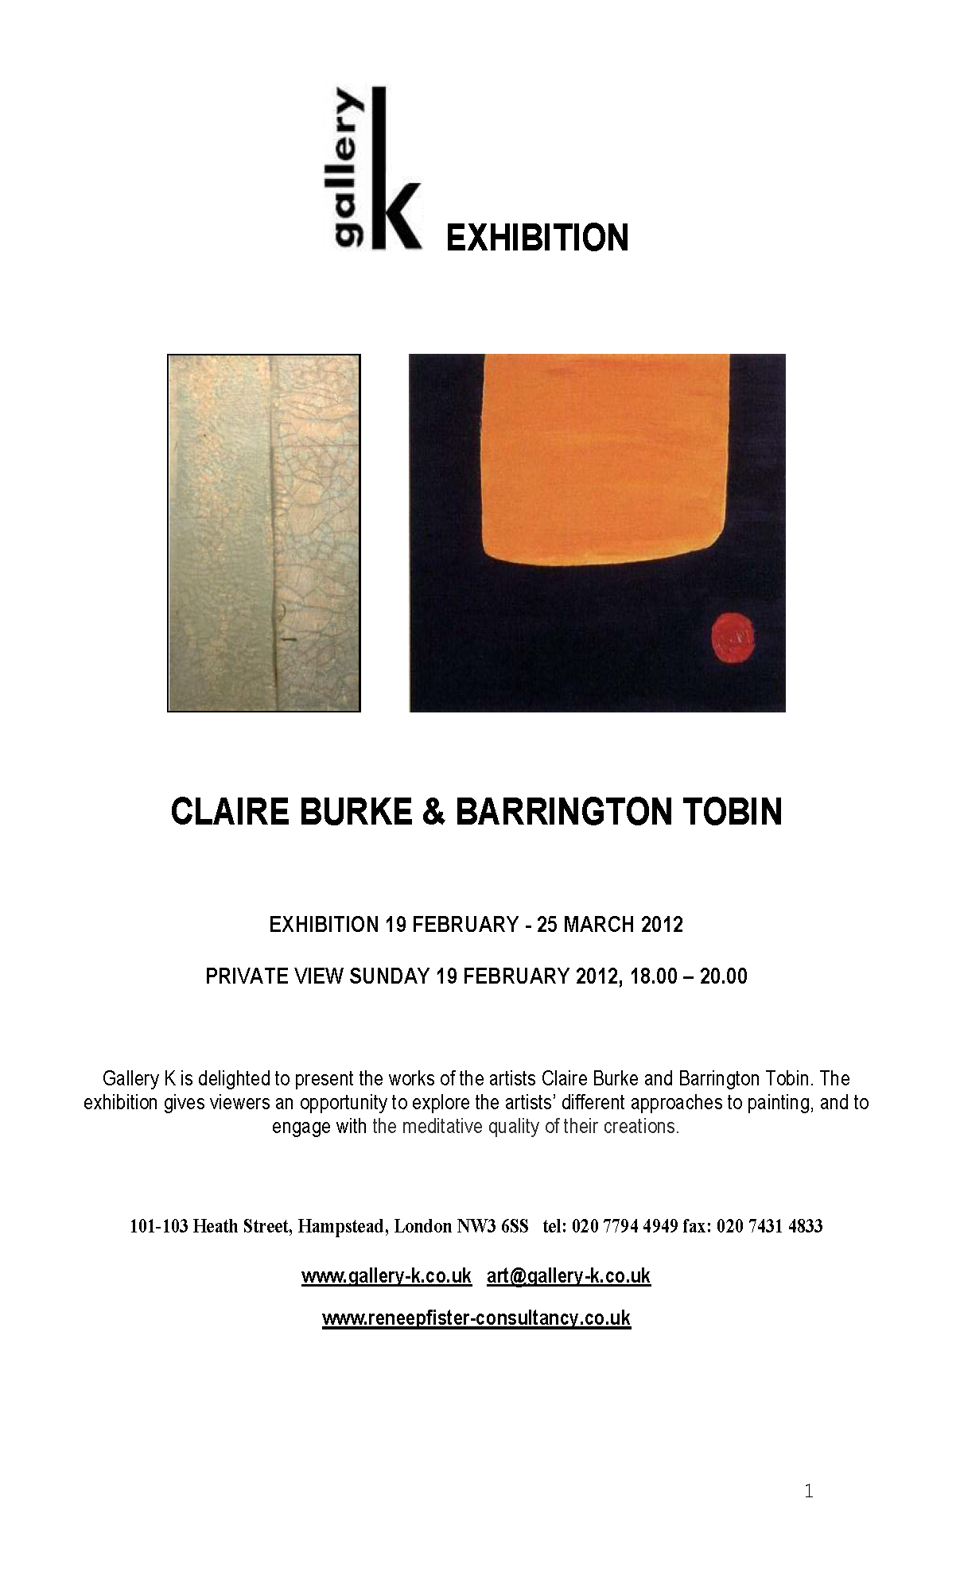 Claire Burke & Barrington Tobin at Gallery K, London.